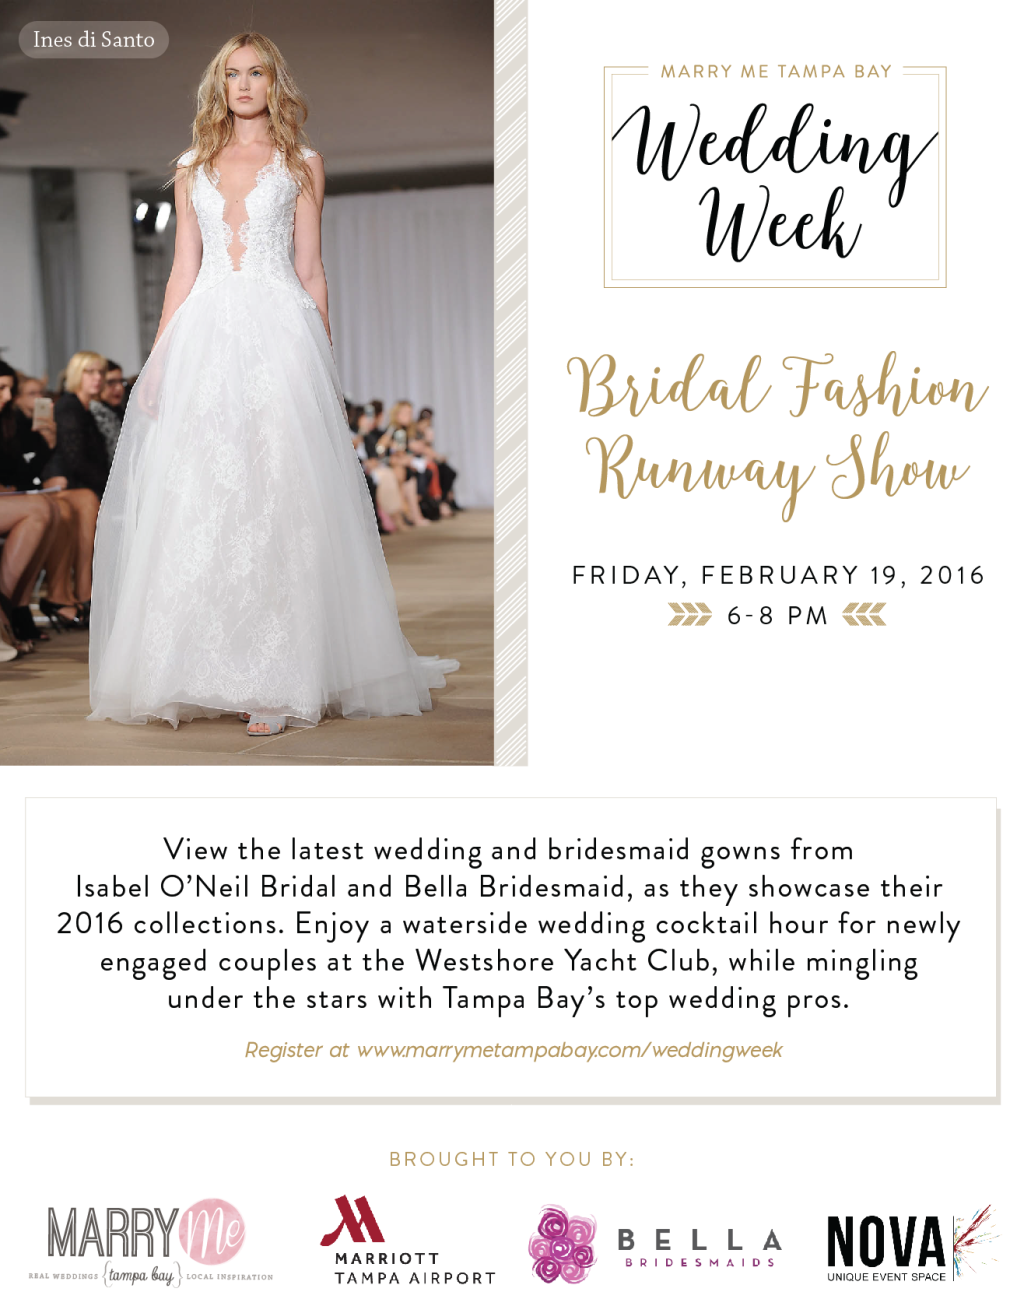 Tampa Bay Bridal Show 2016 | Marry Me Tampa Bay Wedding Week Bridal Fashion Runway Show at the Westshore Yacht Club